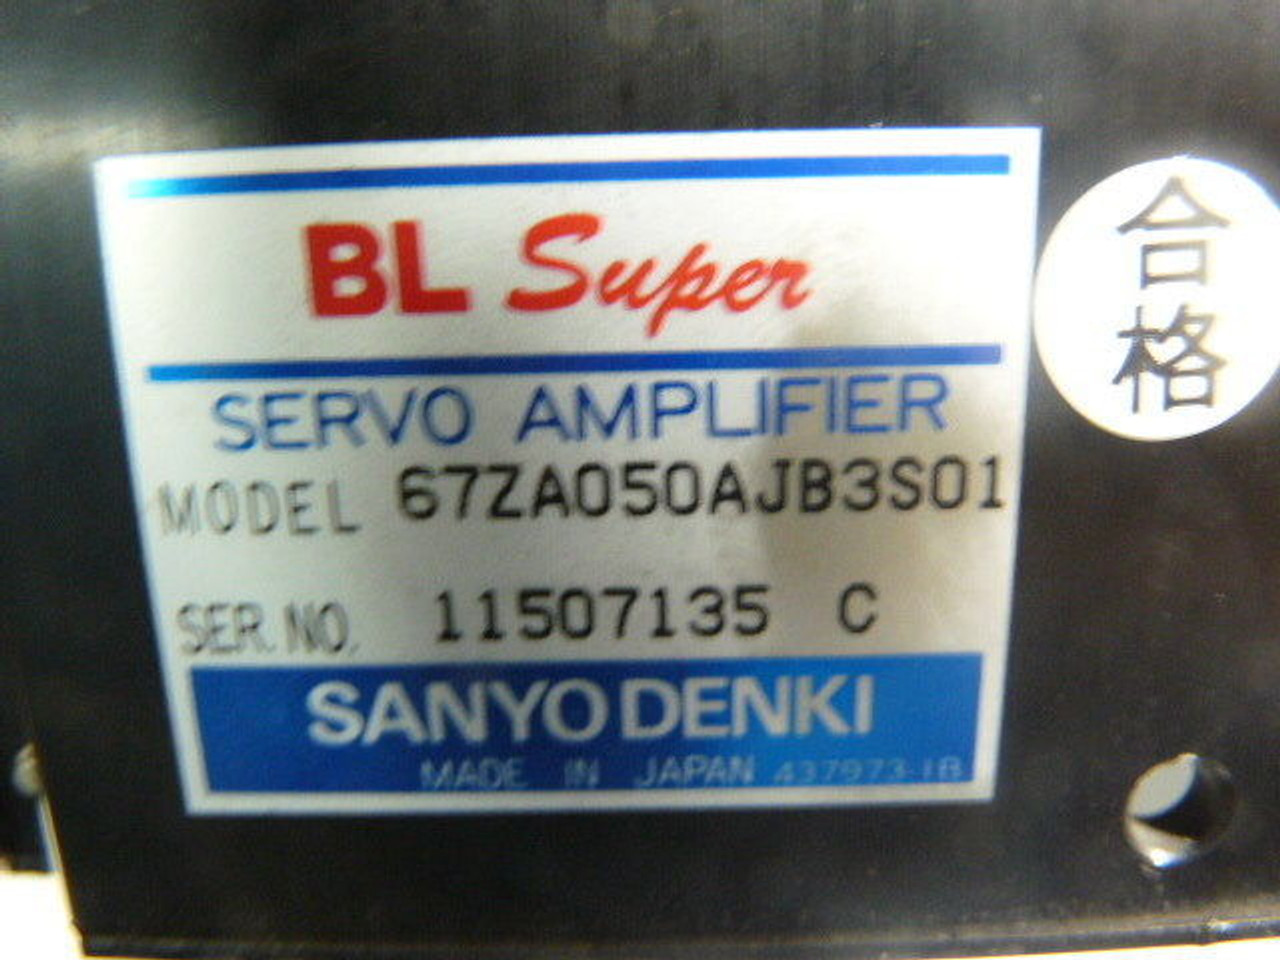 Sanyo Denki 67ZA050AJB3S01 Servo Amplifer 200V 60Hz 3Ph 3.5kVA USED